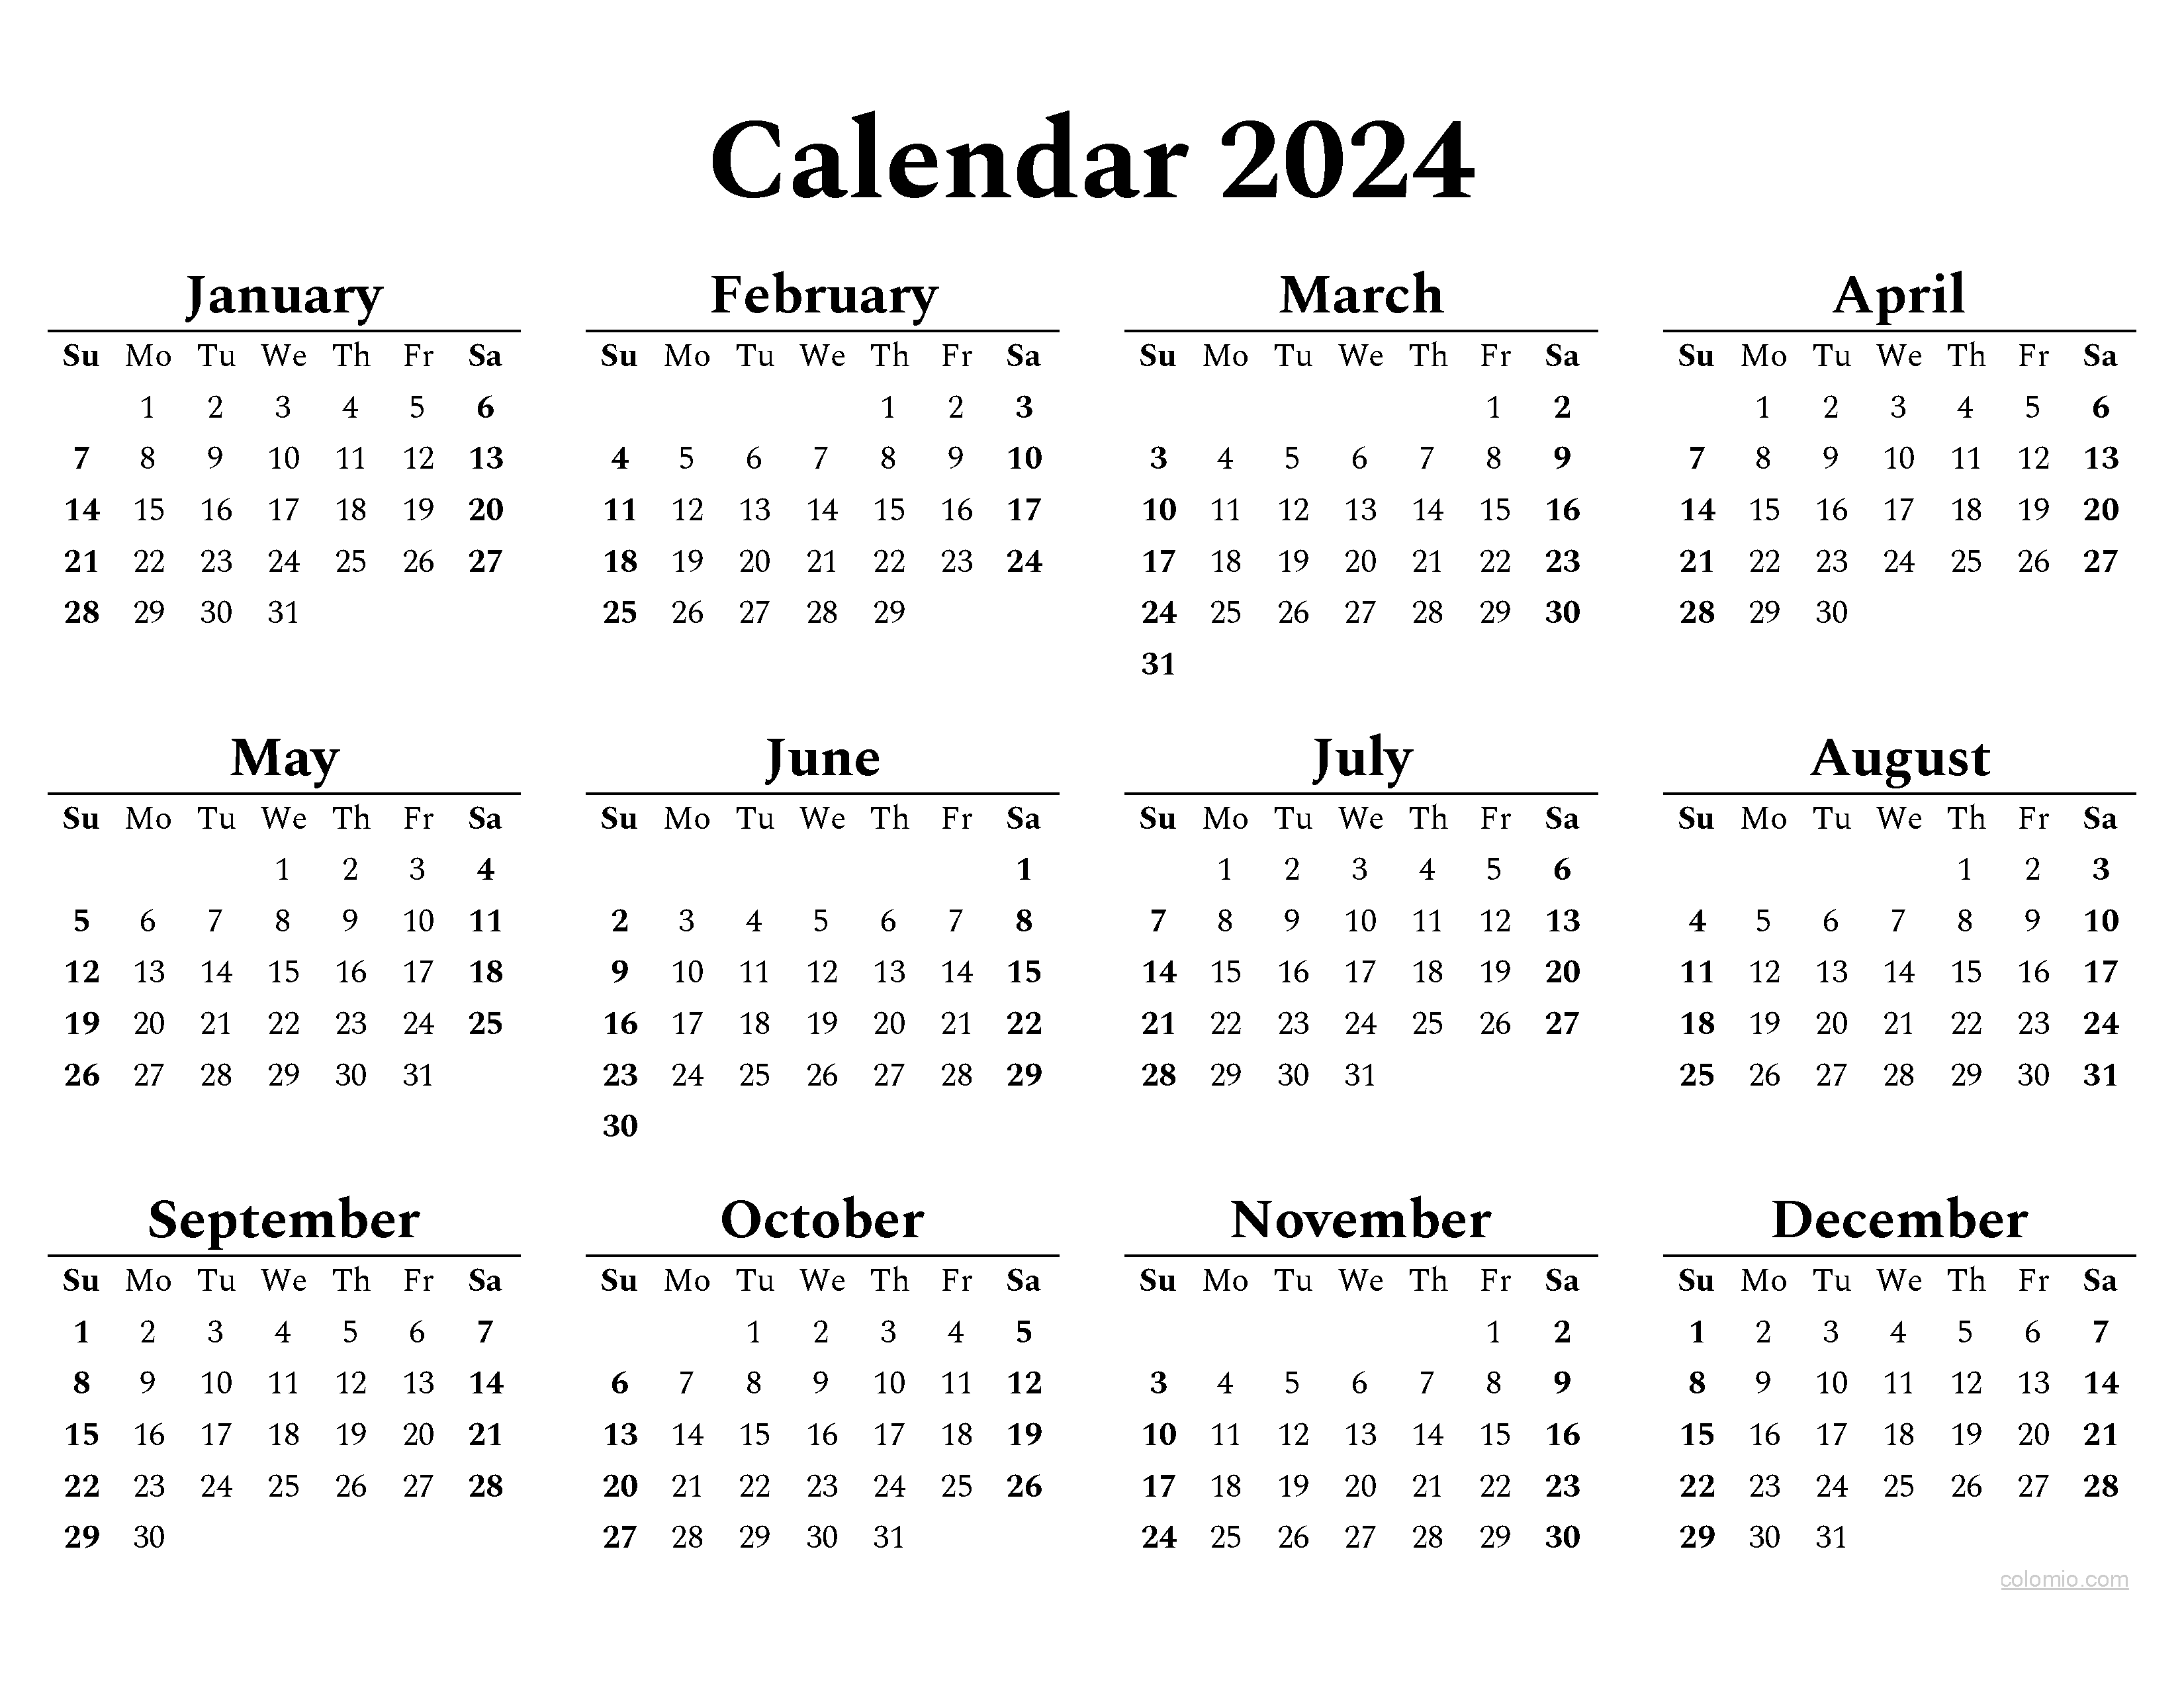 Calendar 2024 Template Pdf Fina Orelle | Free Printable 2024 Calendar By Month Image